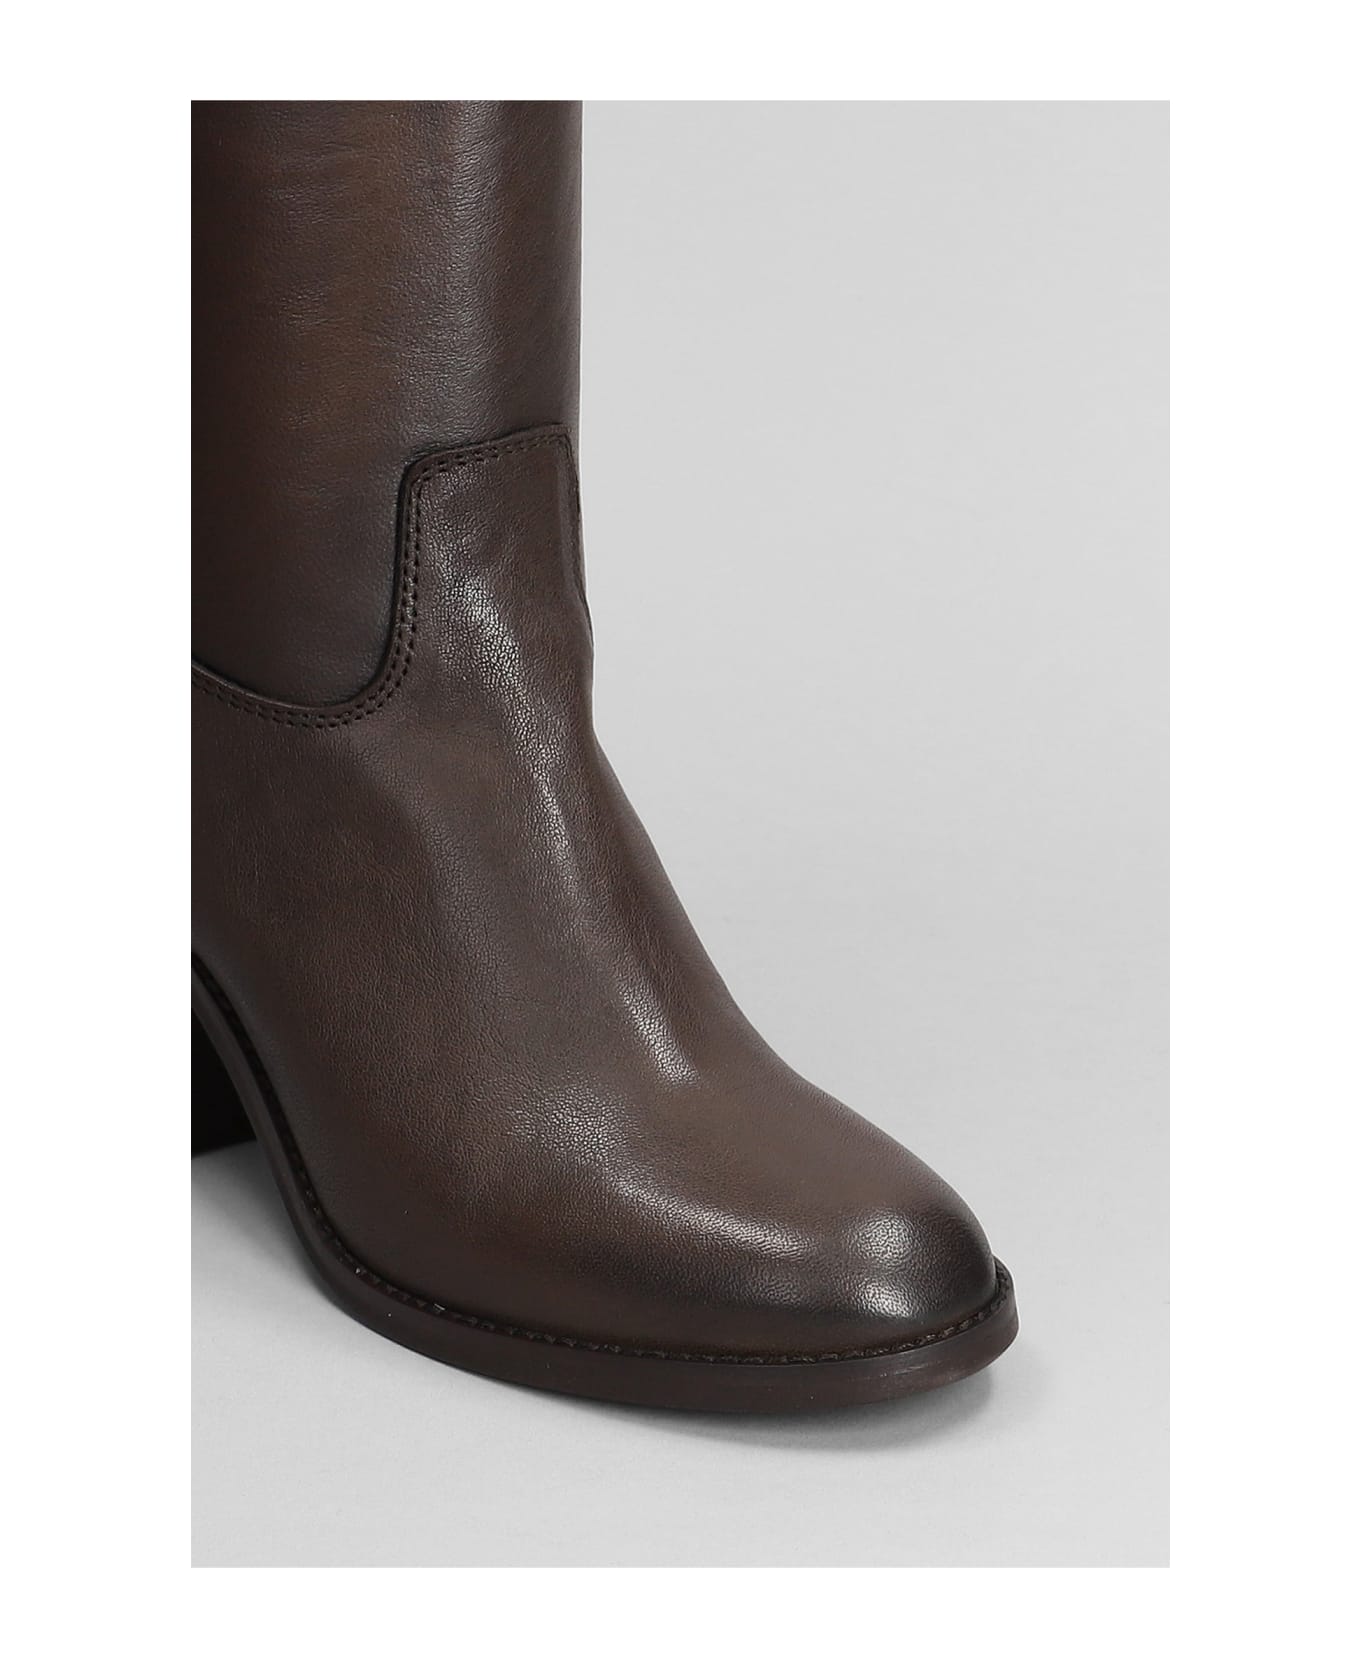 Julie Dee High Heels Boots In Dark Brown Leather - dark brown